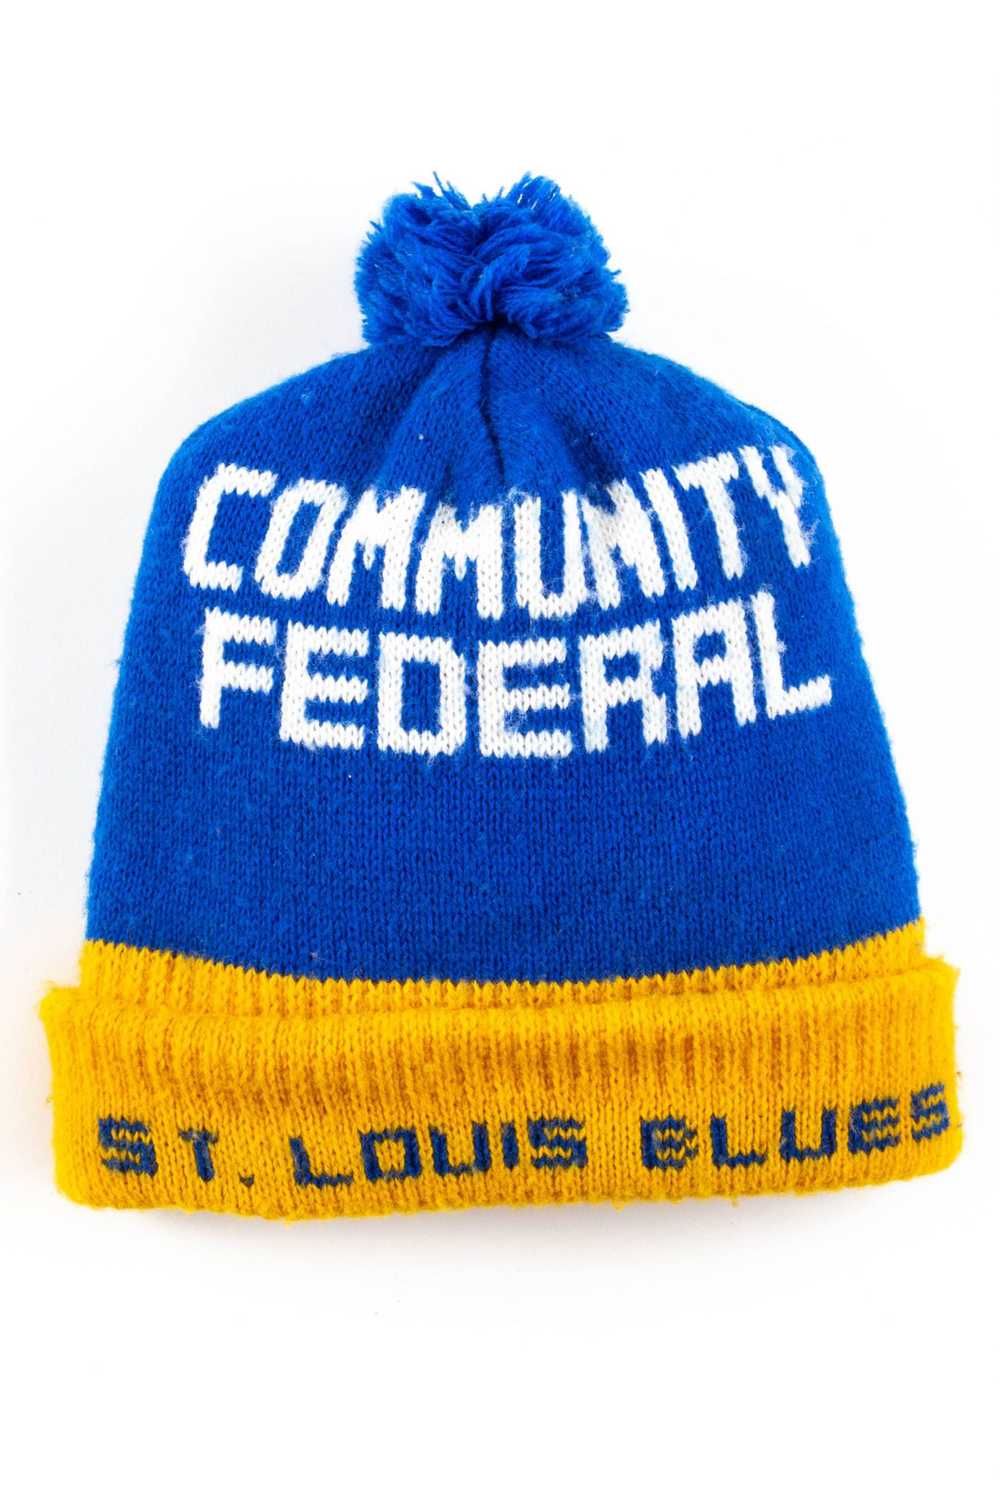 St. Louis Blues Community Federal Pom Pom Beanie - image 2